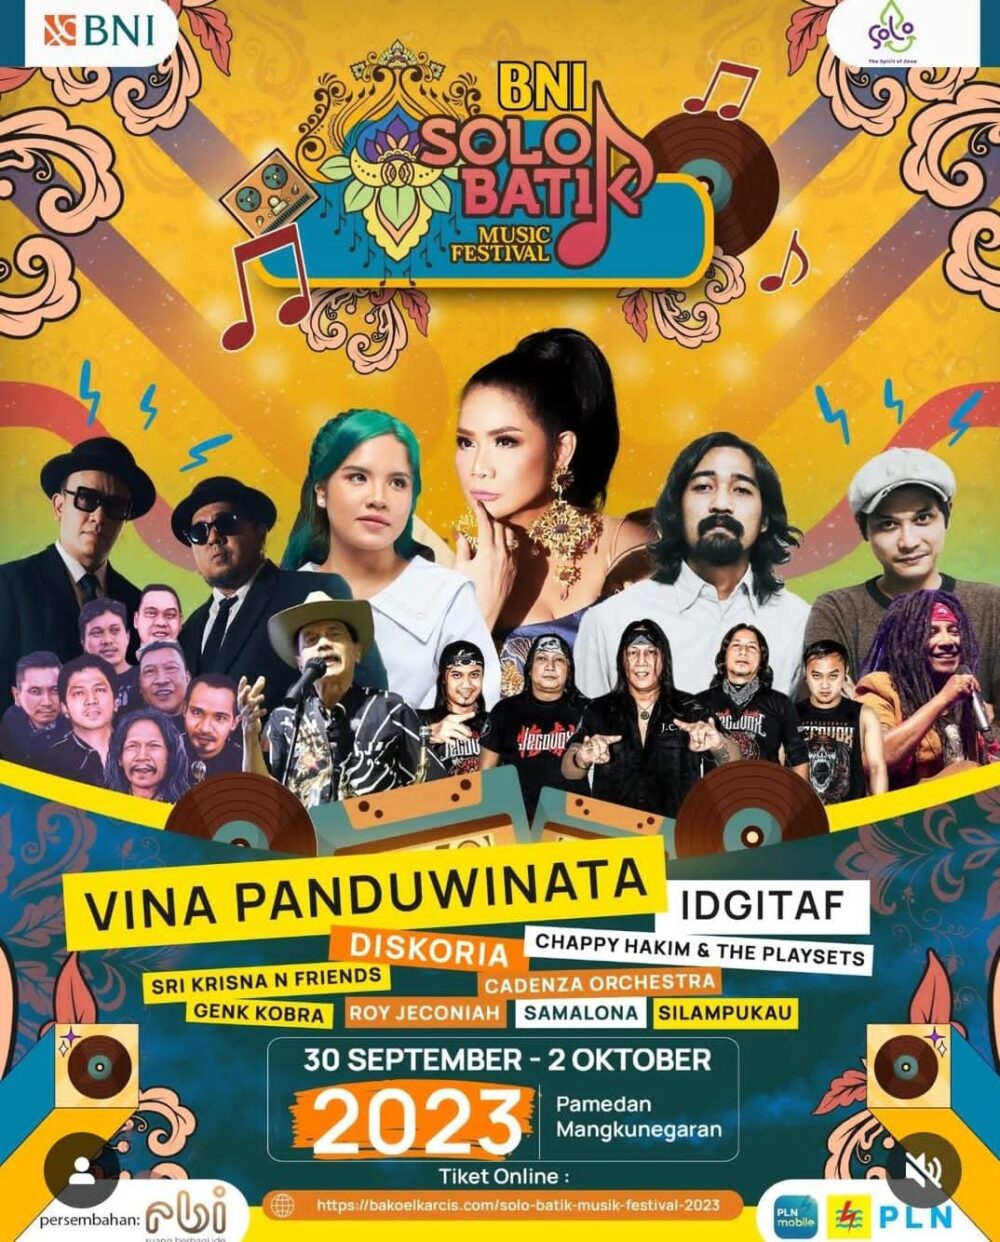 Solo Batik Music Festival